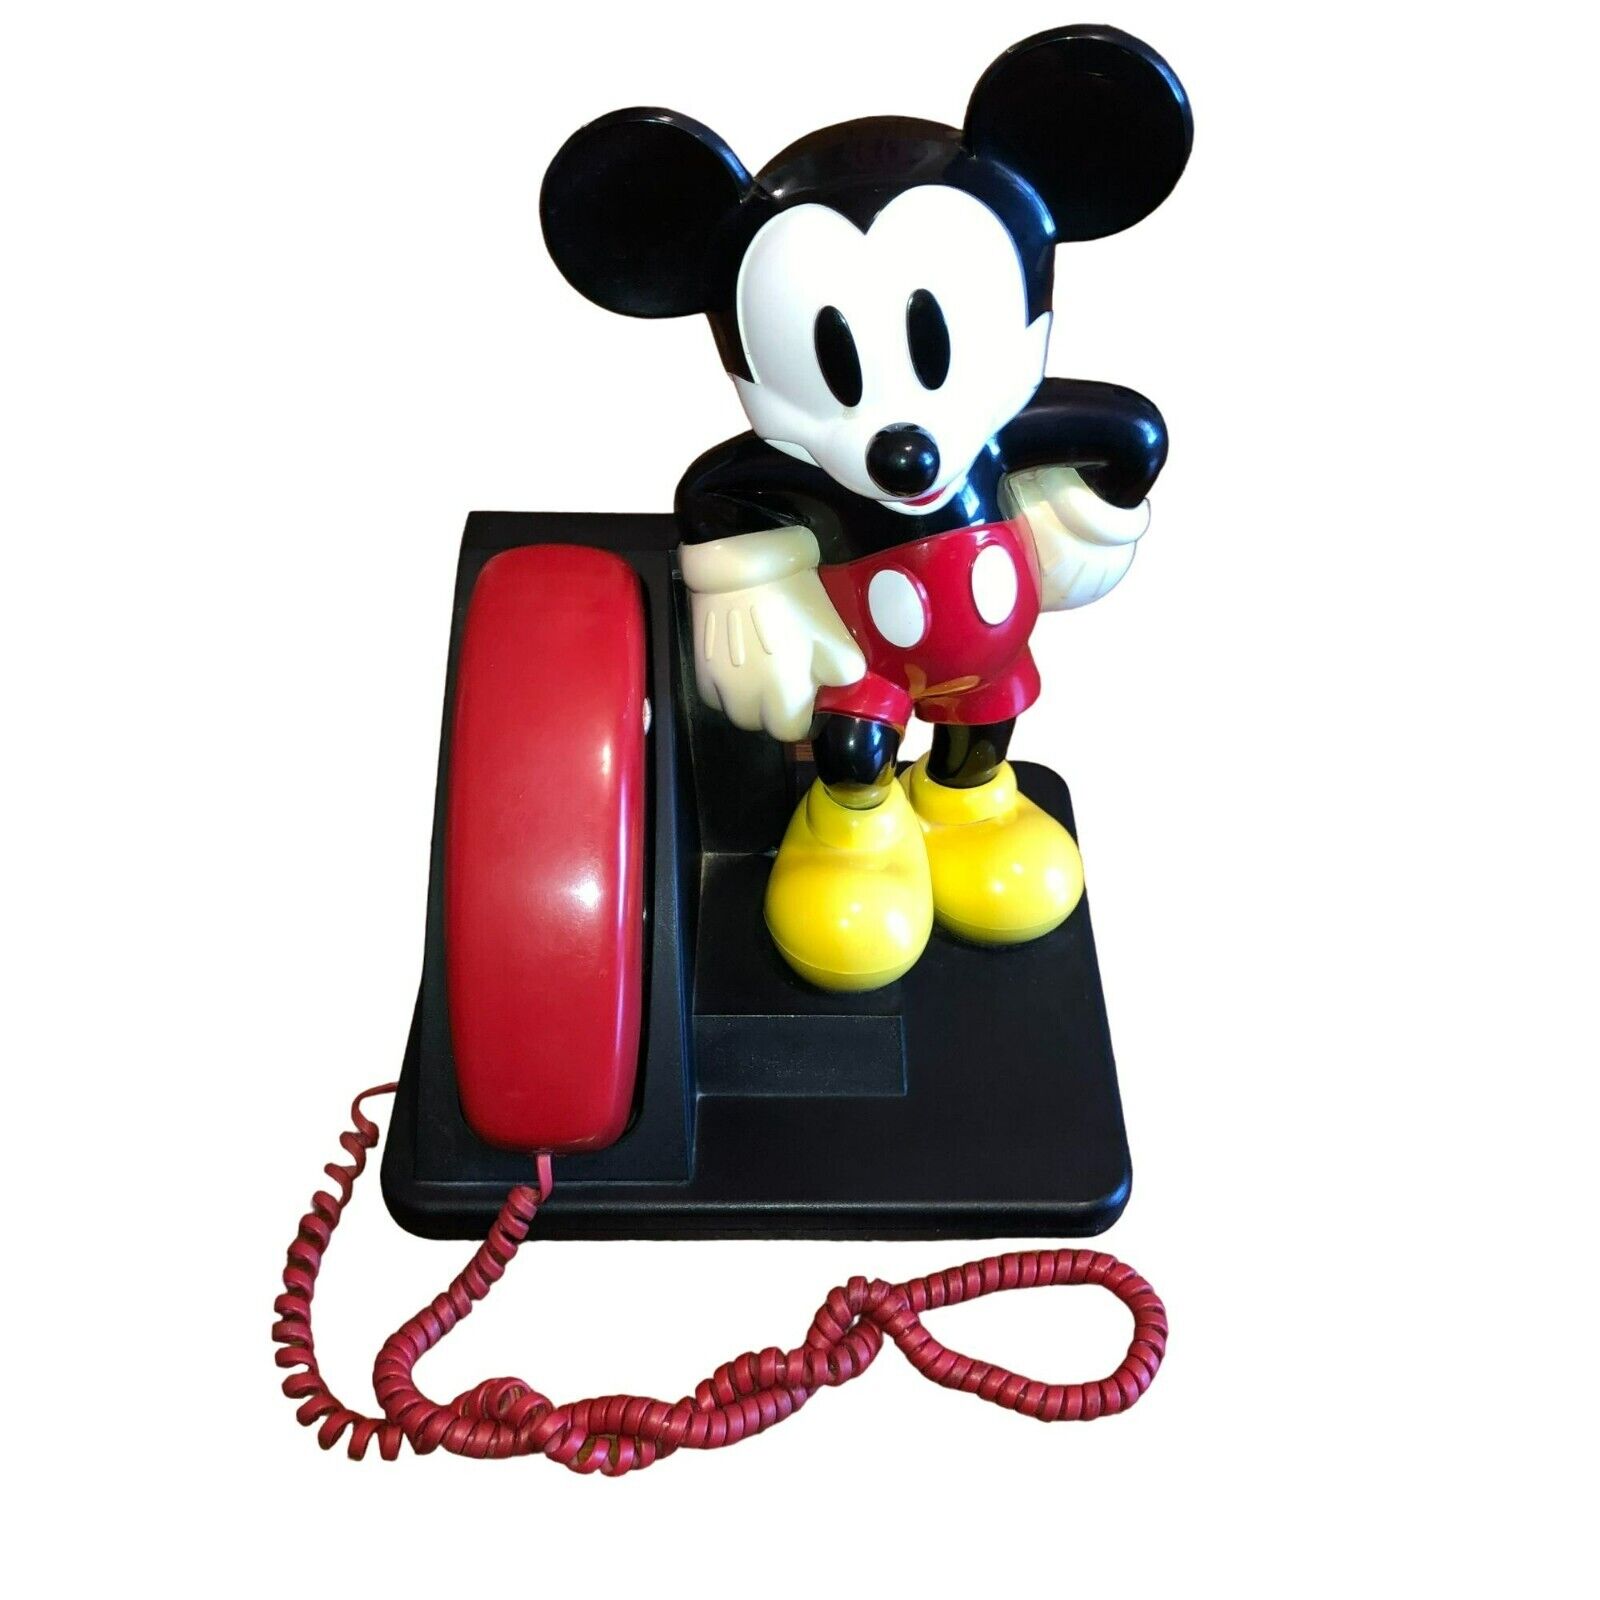 VINTAGE MICKEY MOUSE TELEPHONE DISNEY 90 AT&T DESIGNLINE LANDLINE TESTED WORKING